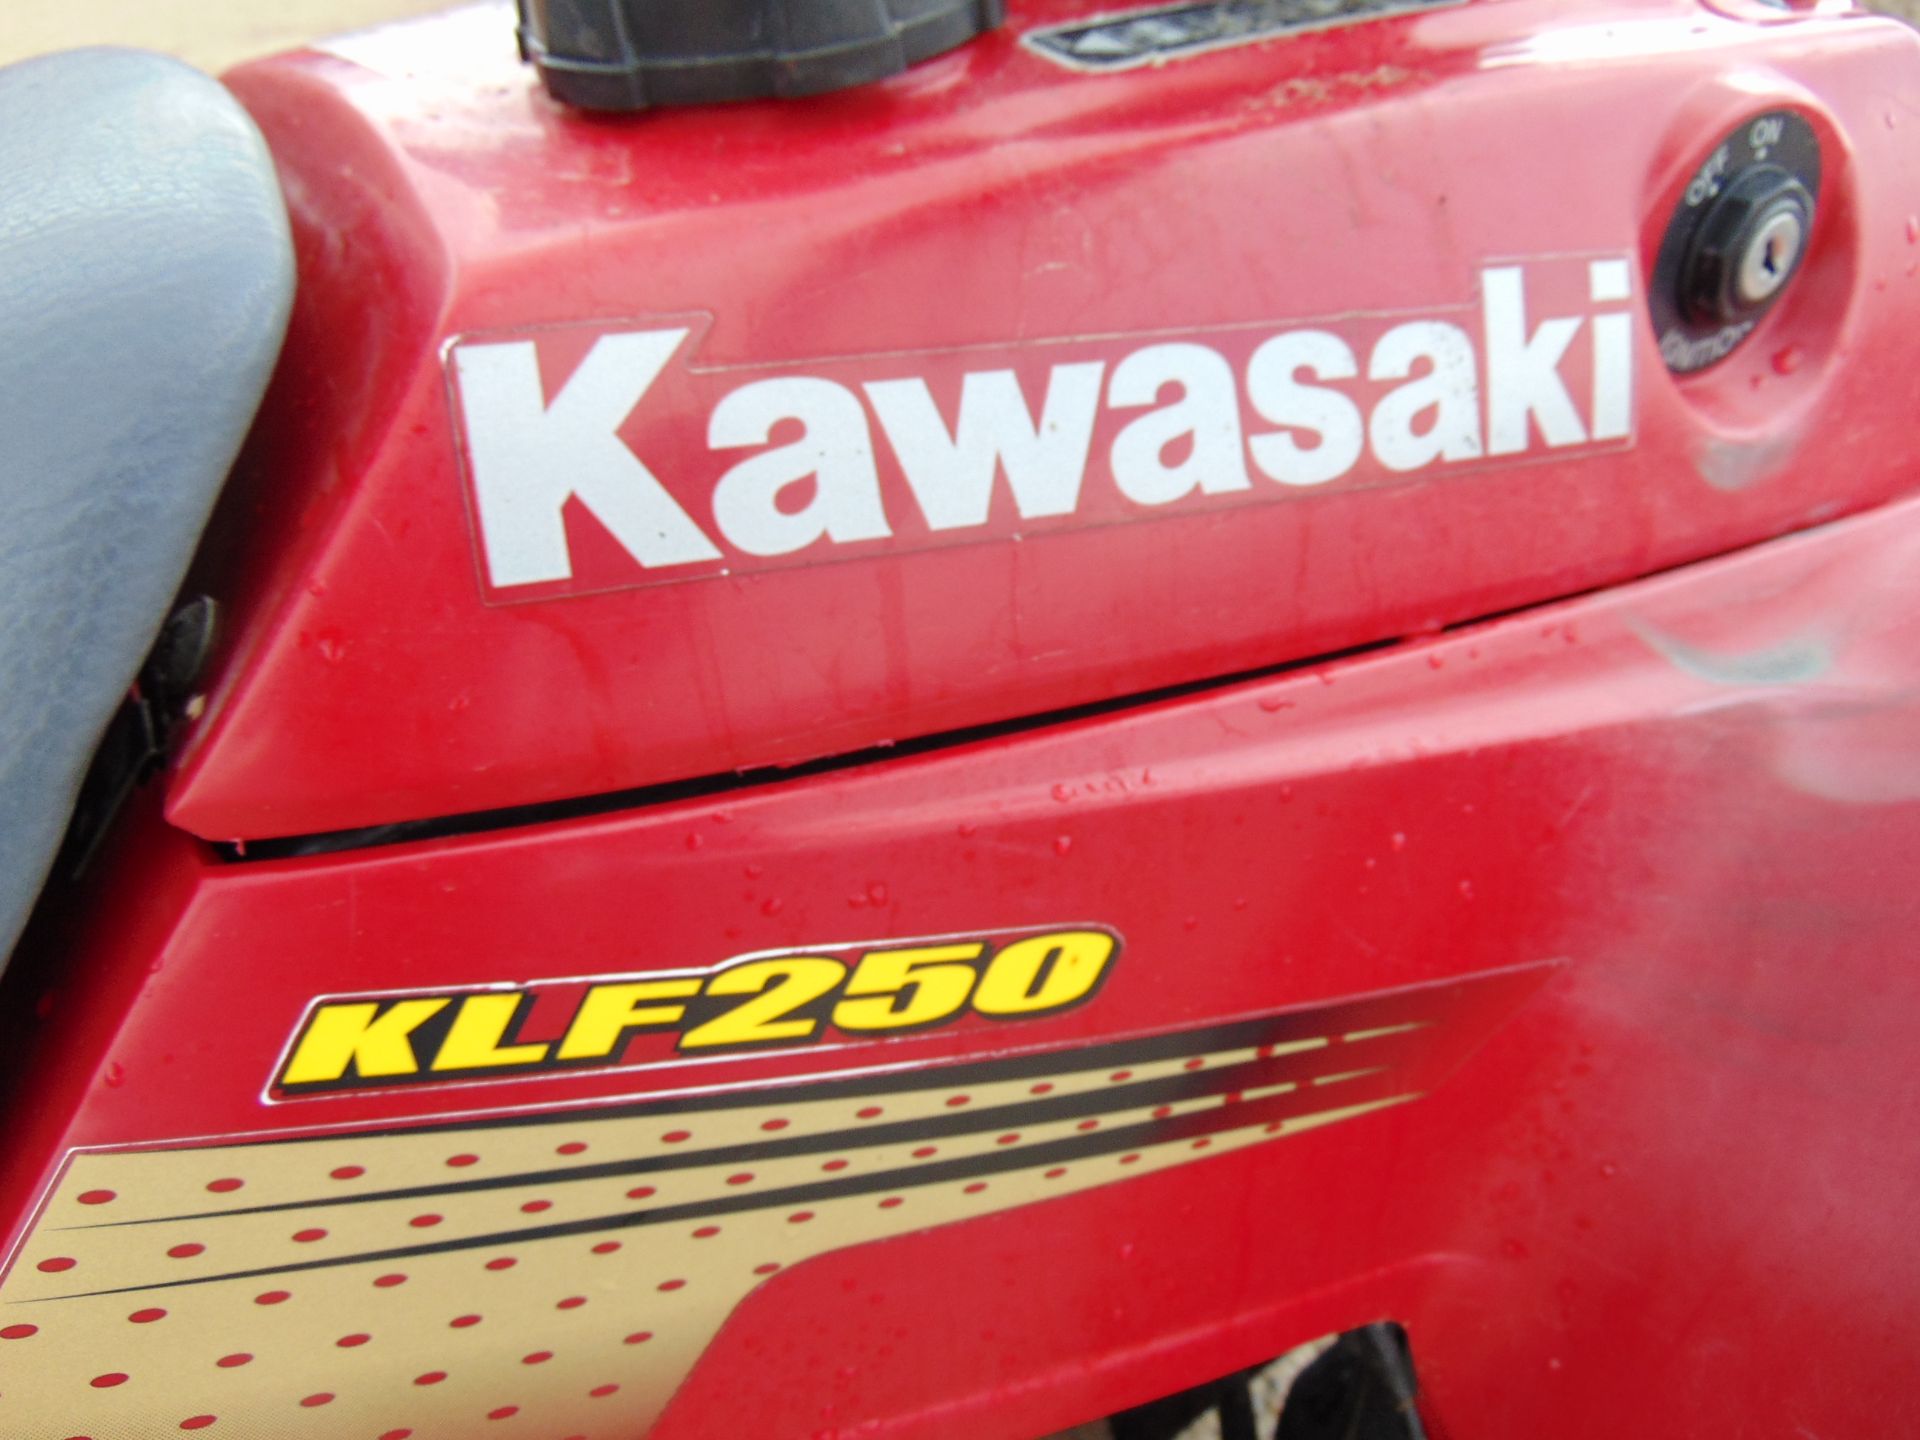 Kawasaki KLF250 Quad Bike - Image 12 of 12